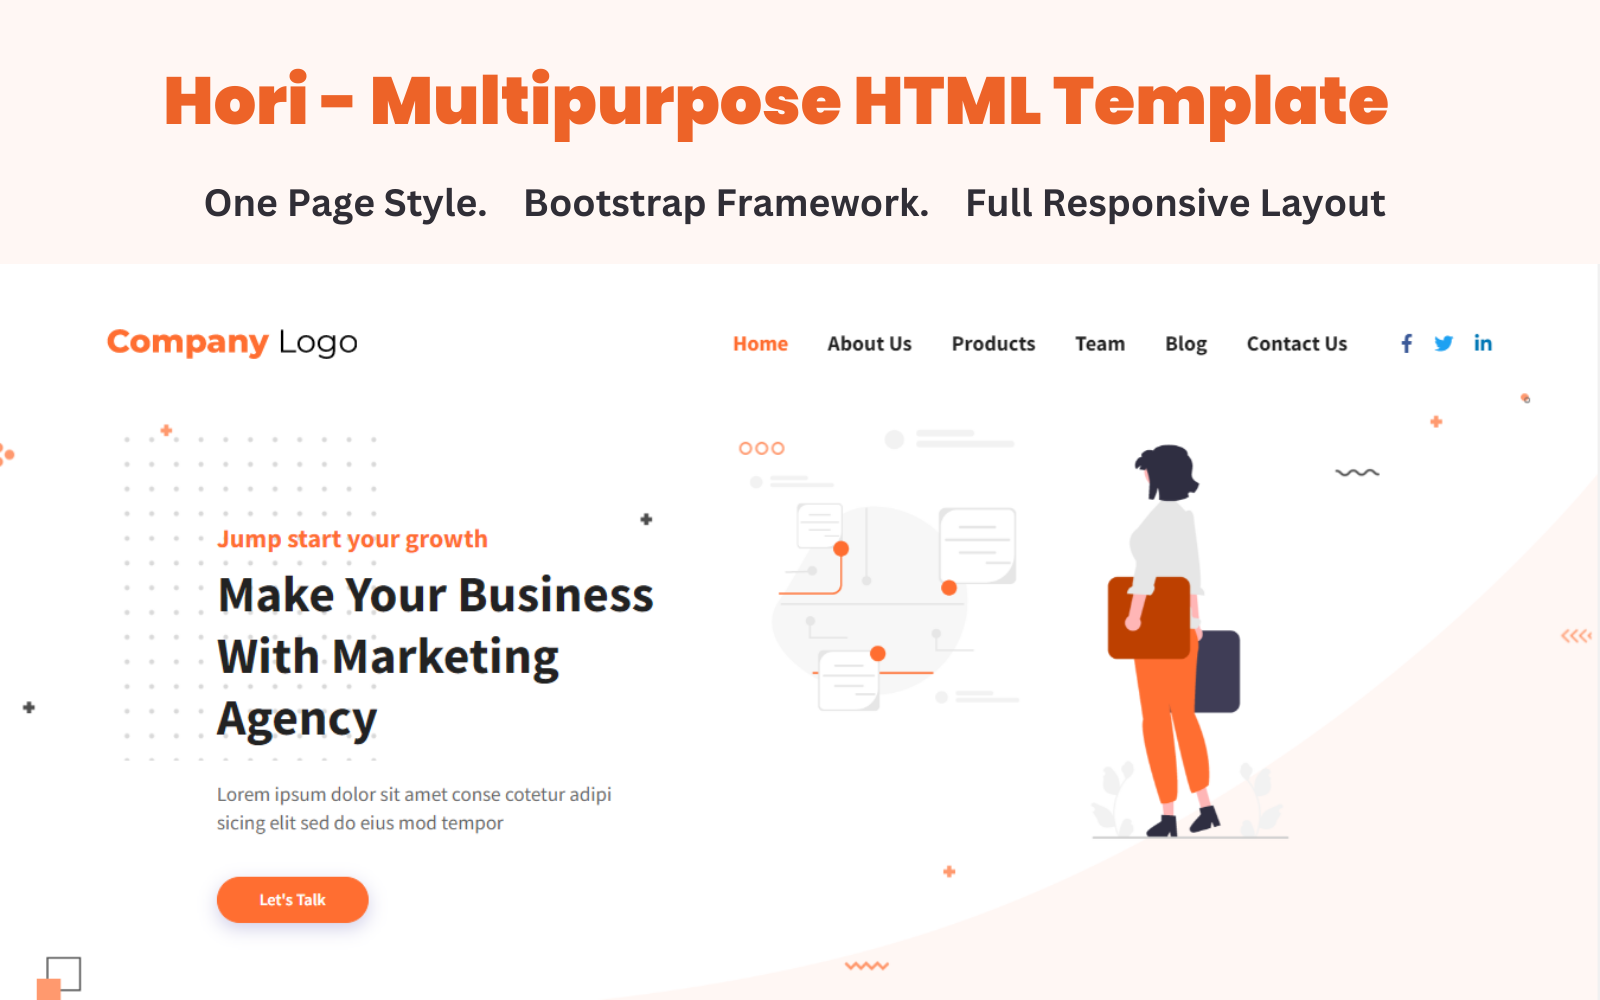 Hori - Multipurpose HTML Template